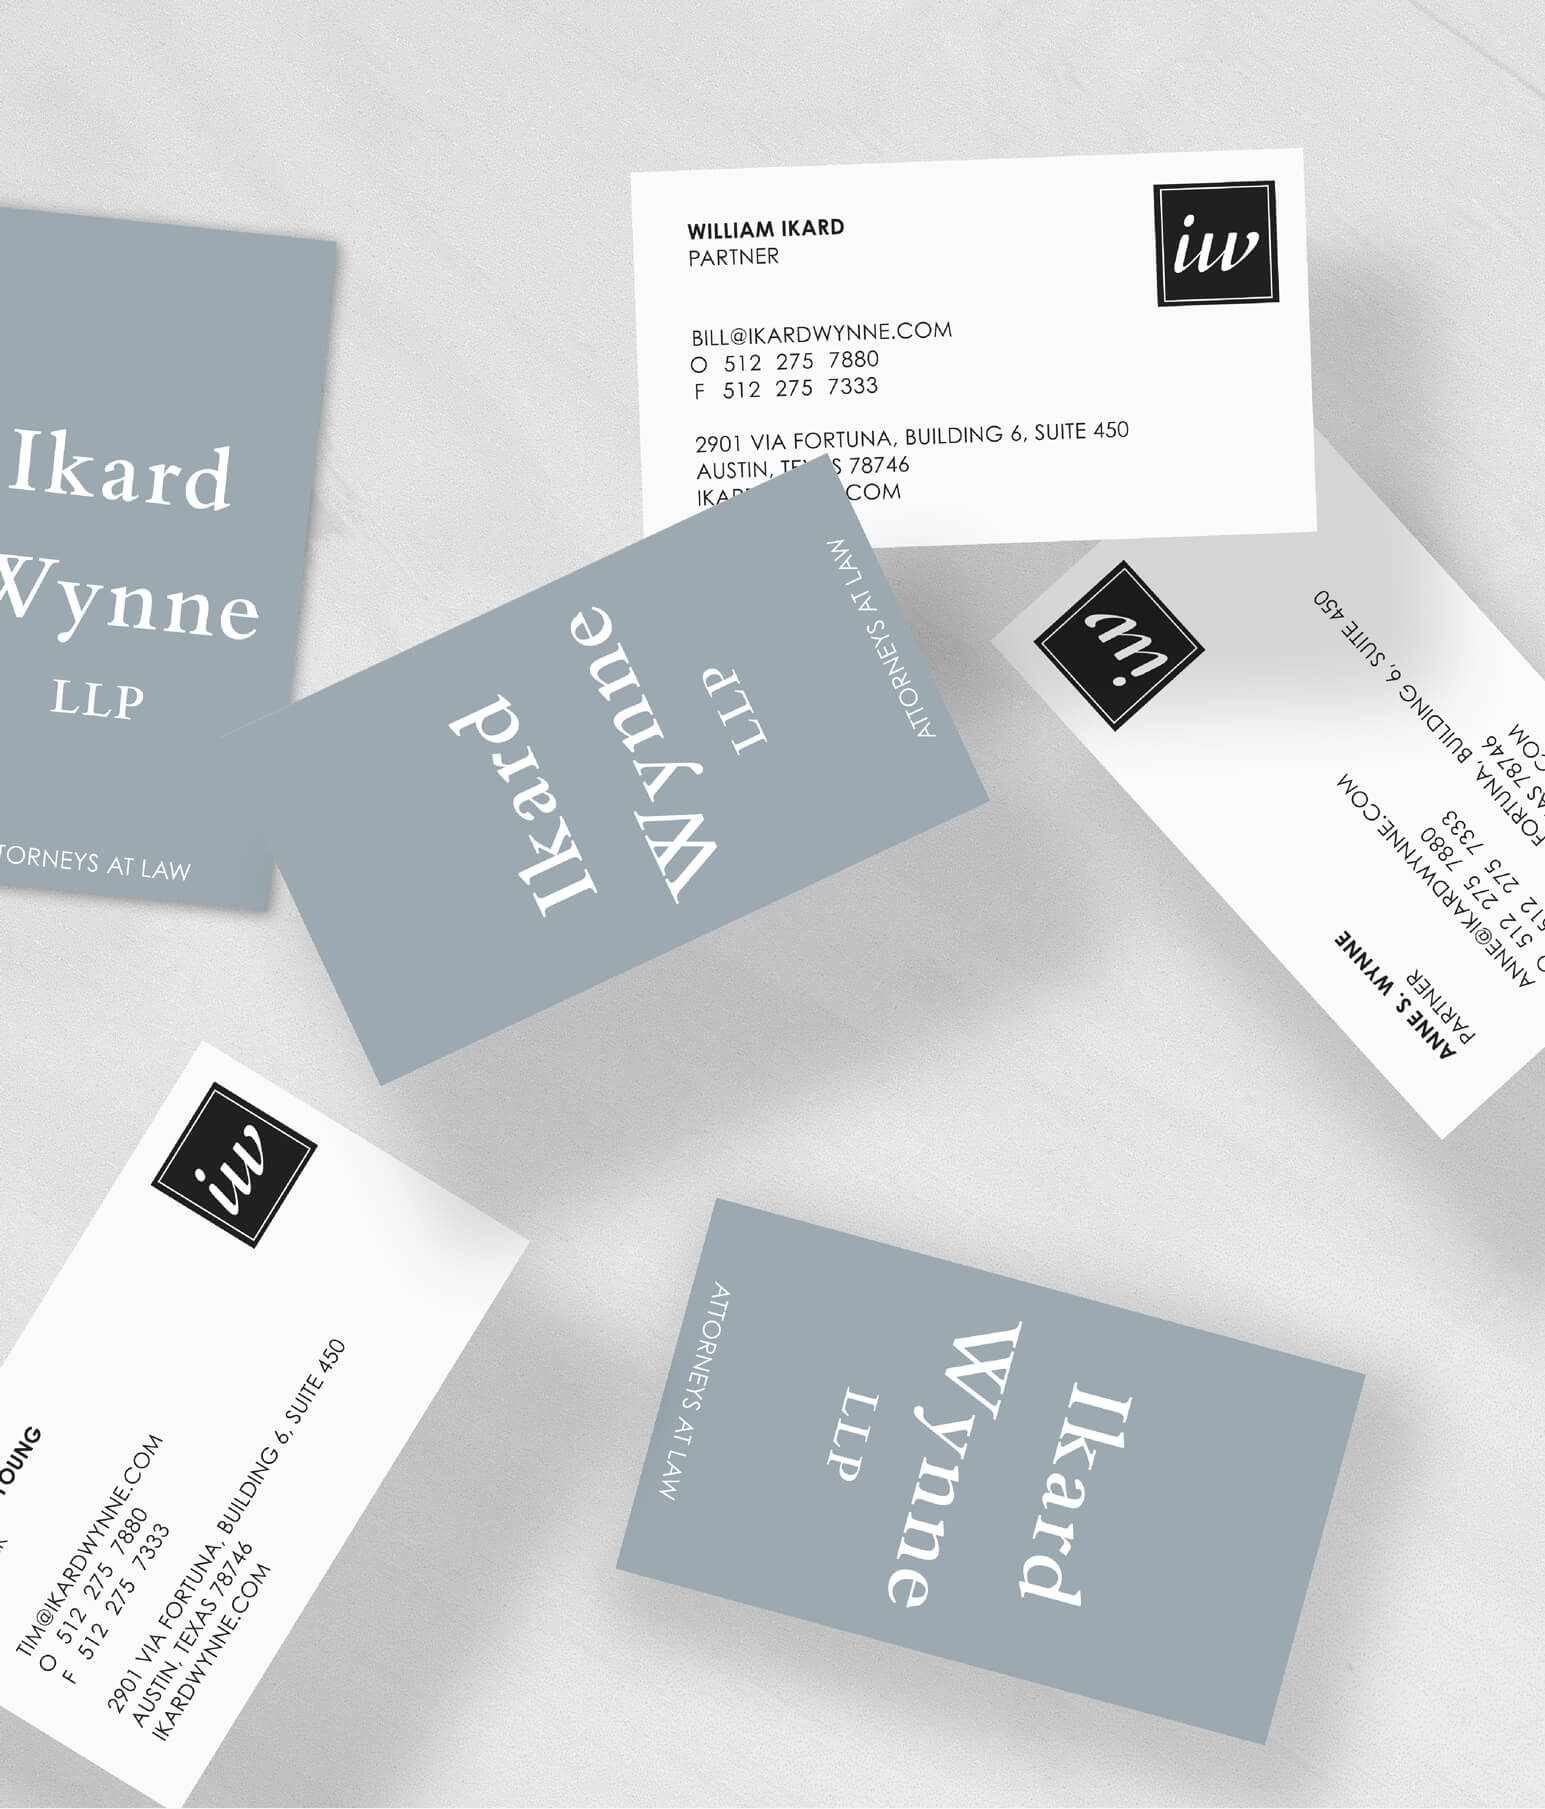 Ikard Wynne LLP business card design